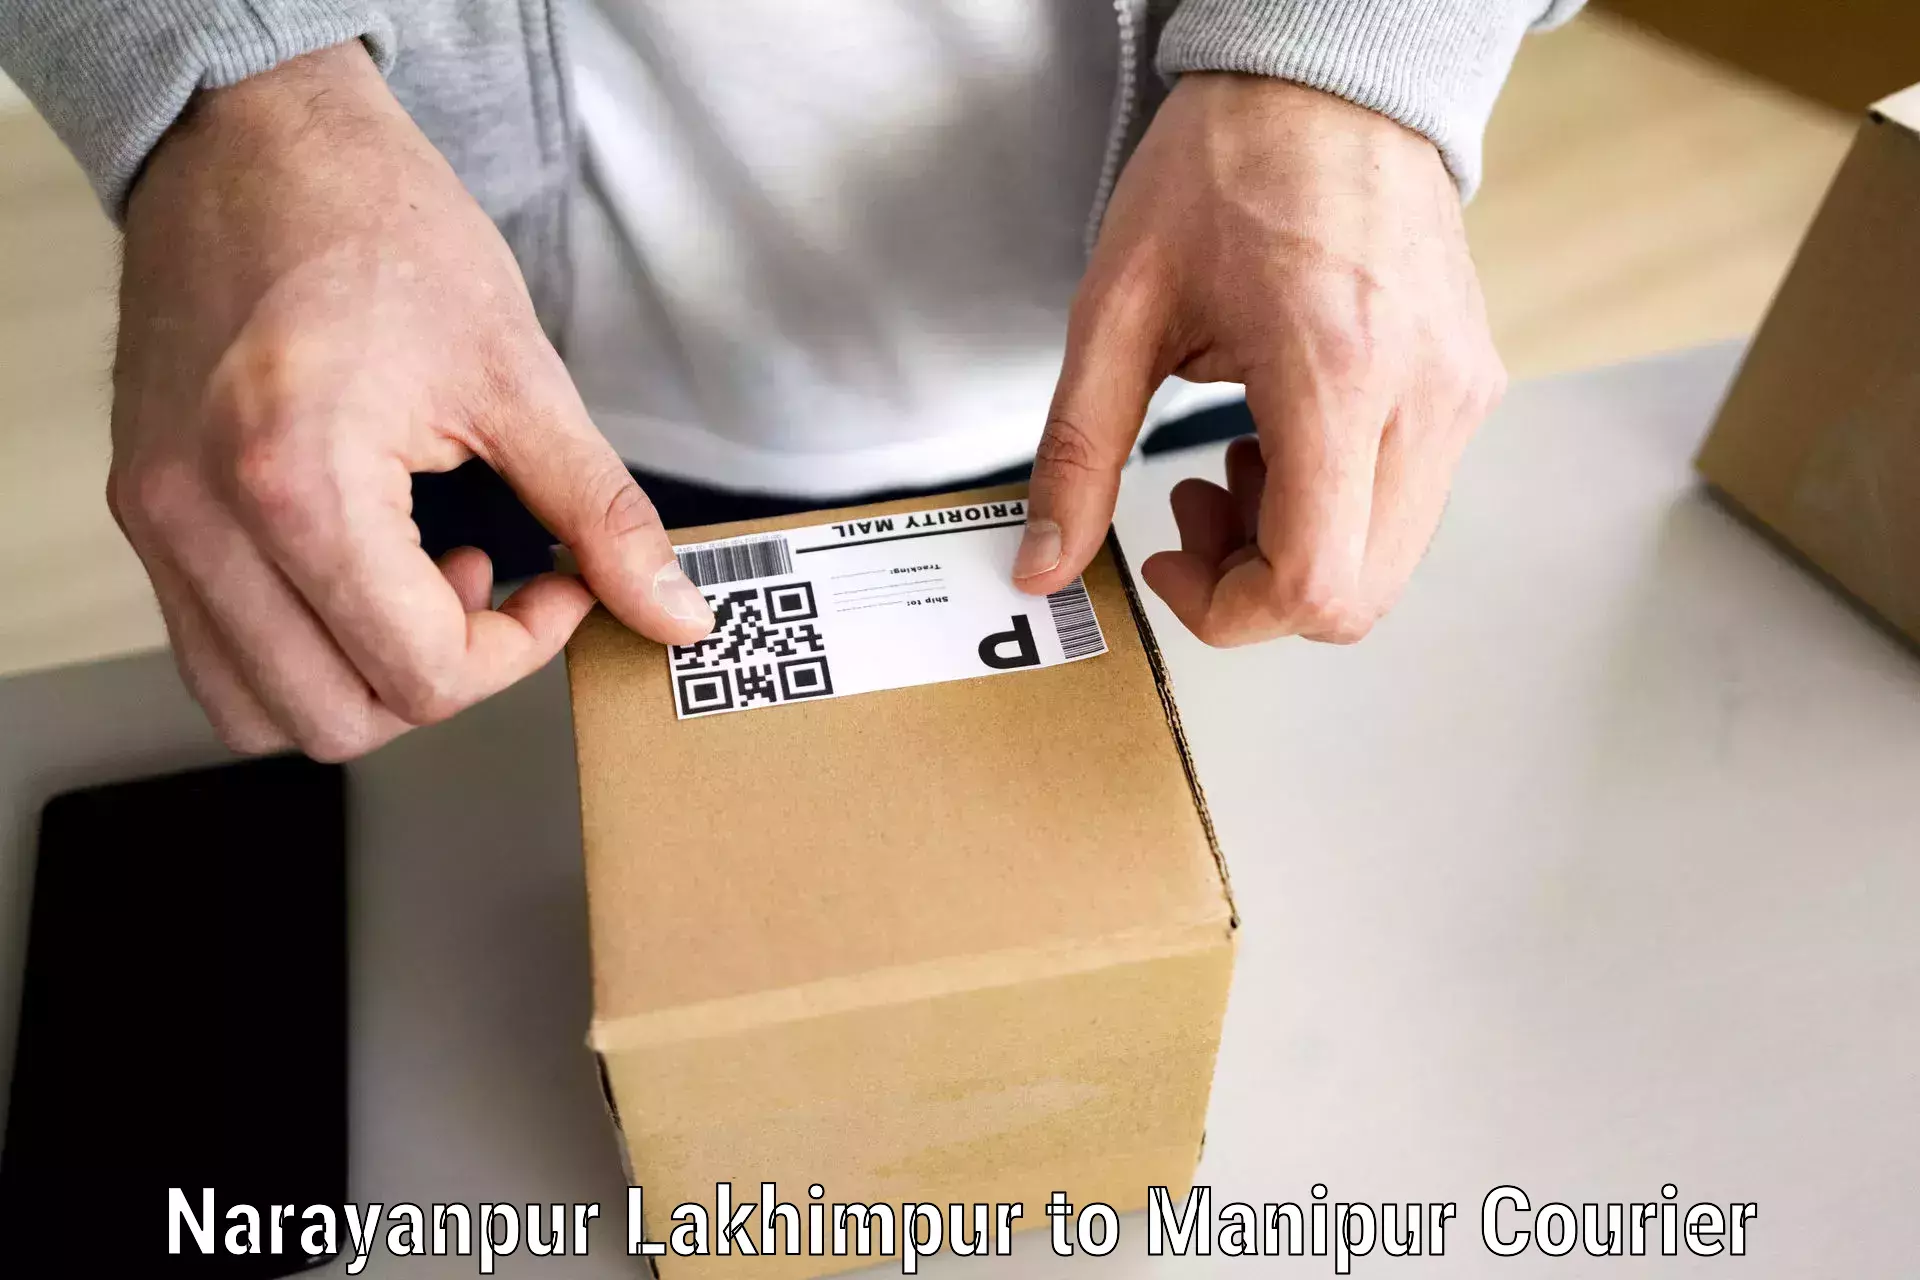 Furniture delivery service Narayanpur Lakhimpur to Senapati